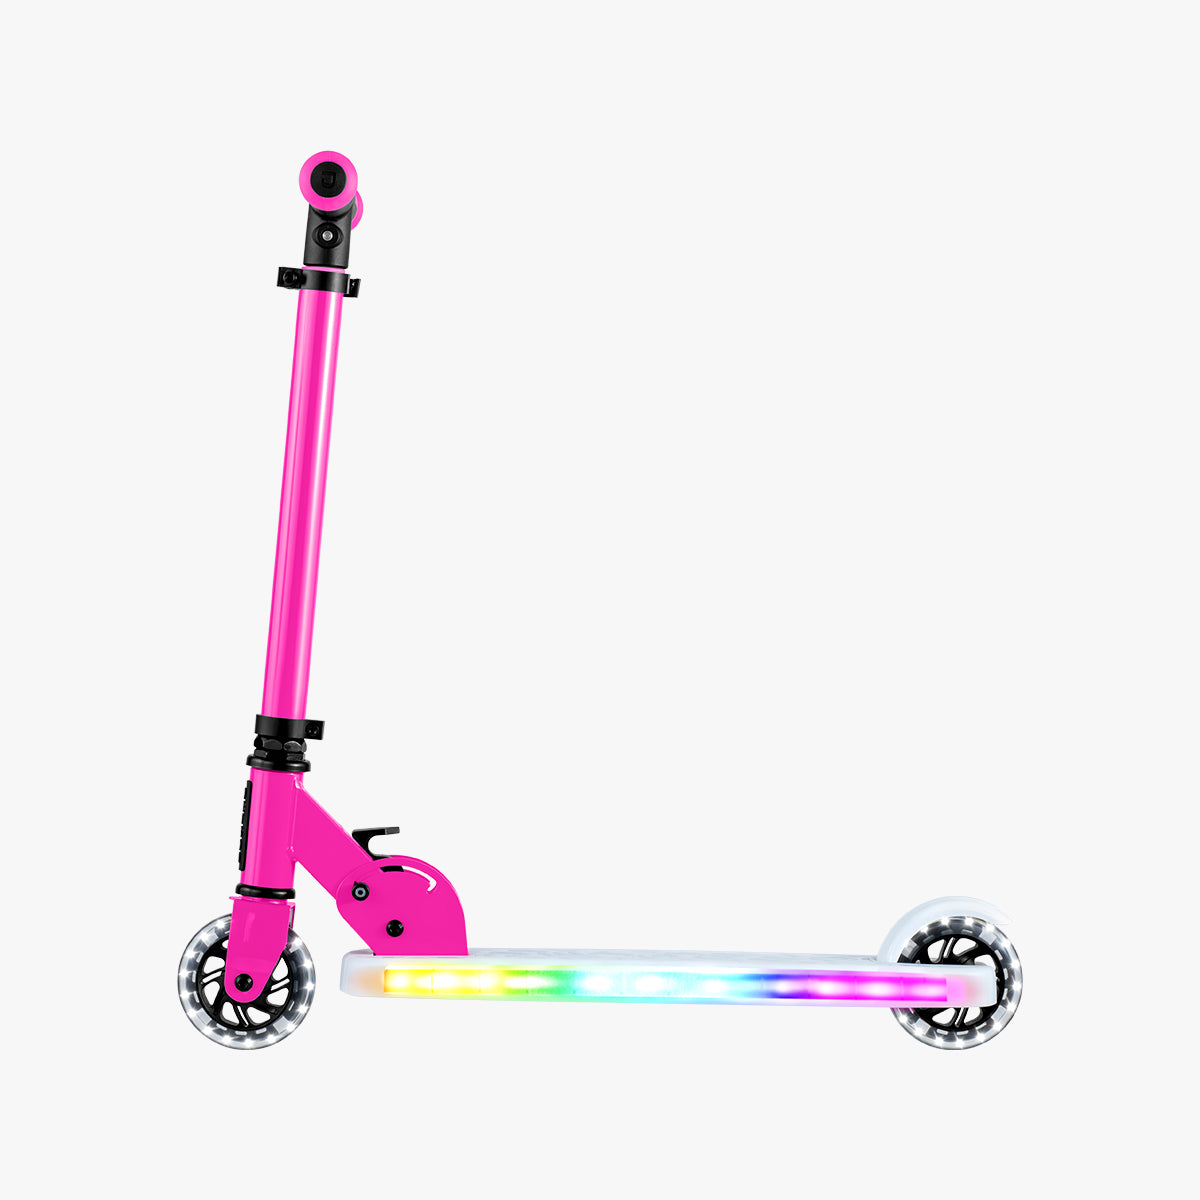 helio x kick scooter in pink facing left